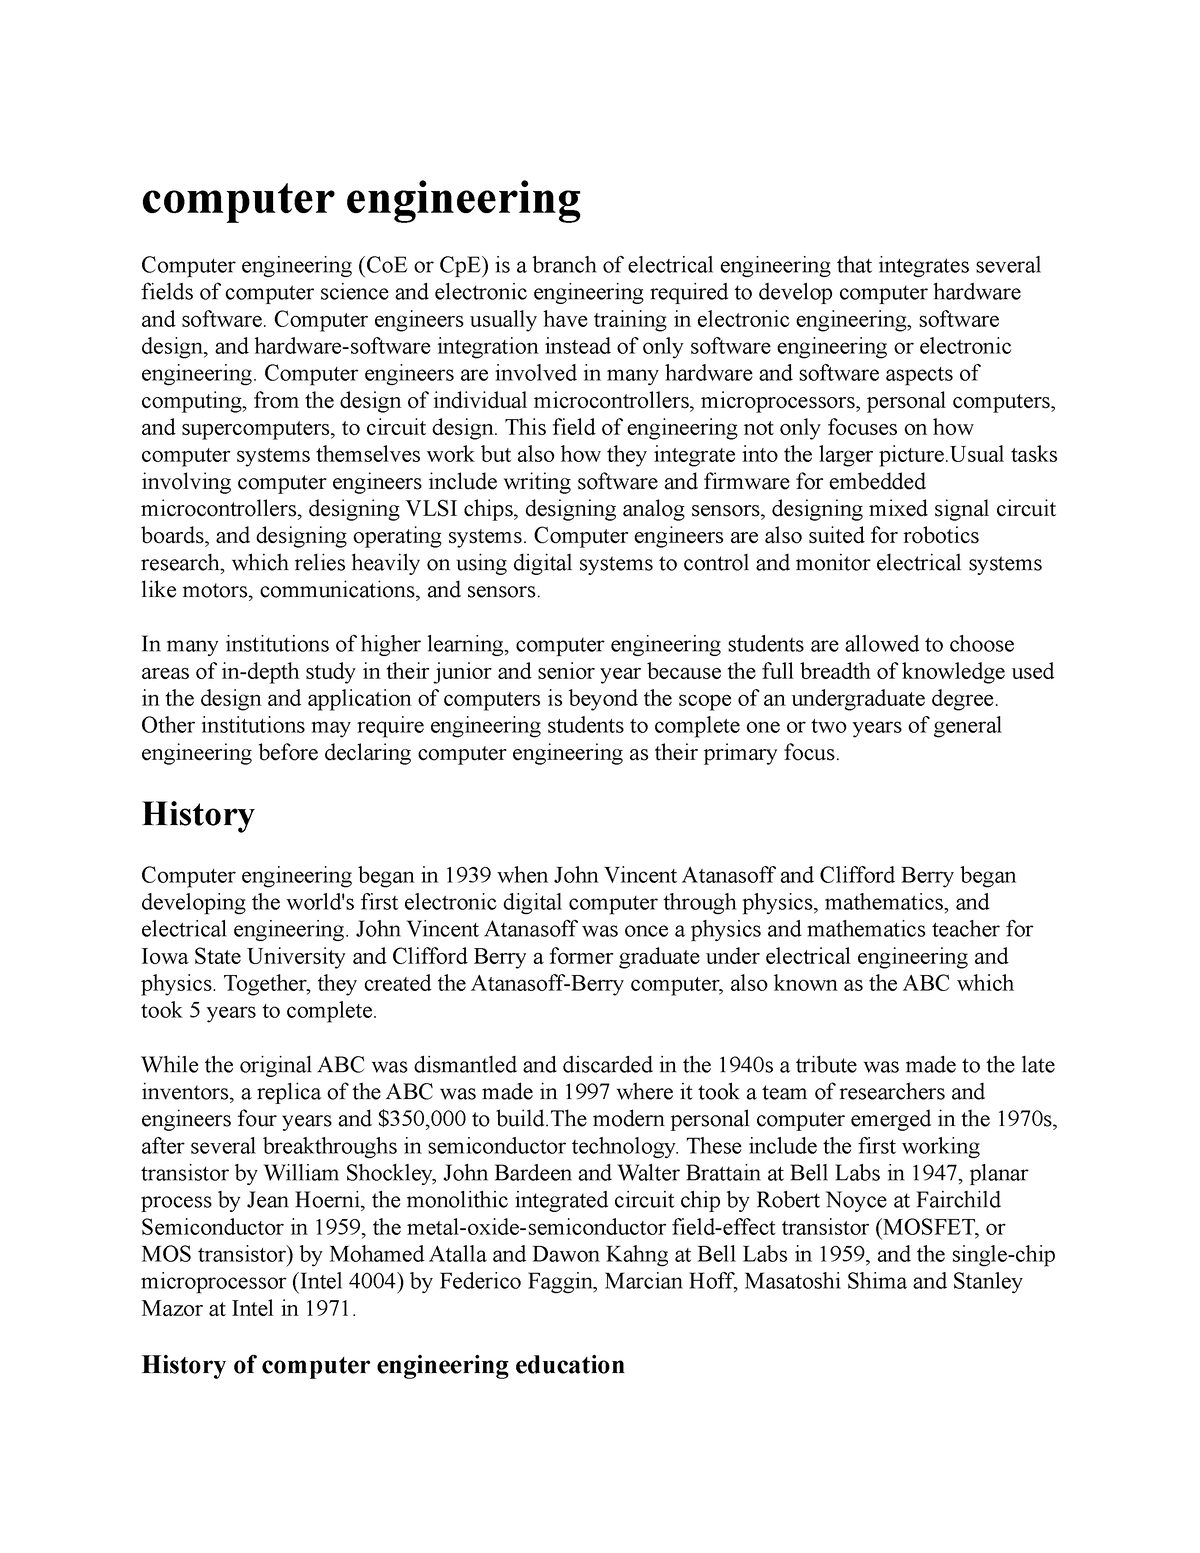 History of computer engineering - computer engineering Computer ...